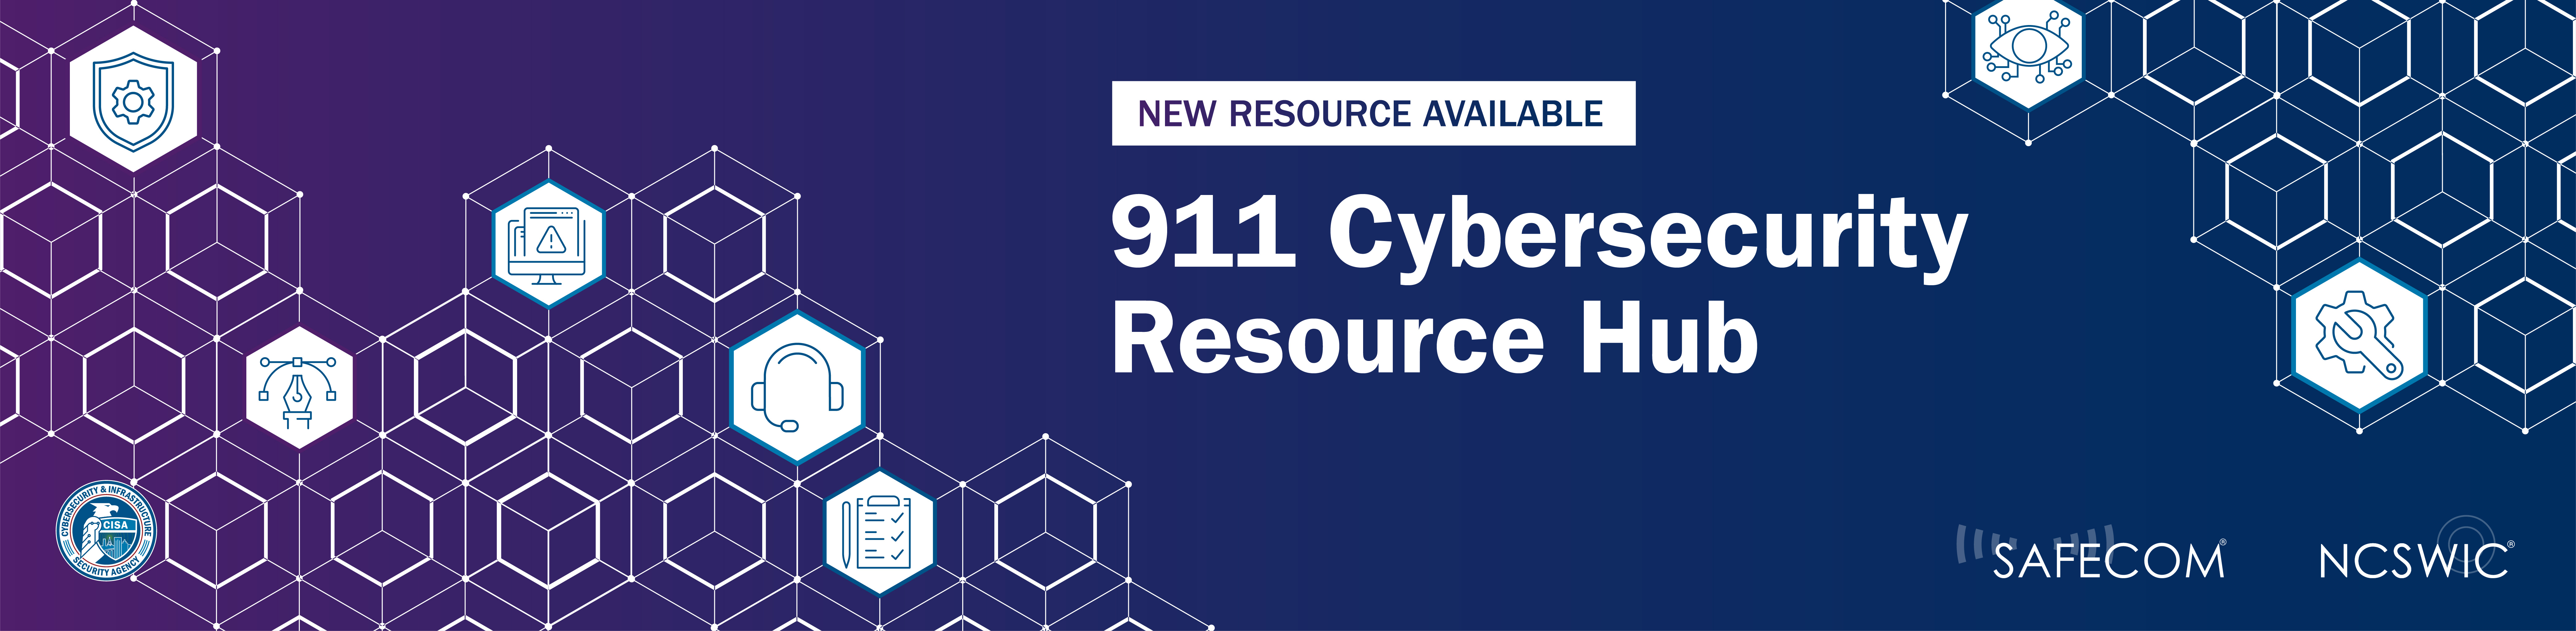 New Resource Available 911 Cybersecurity Resource Hub. SAFECOM. NCSWIC